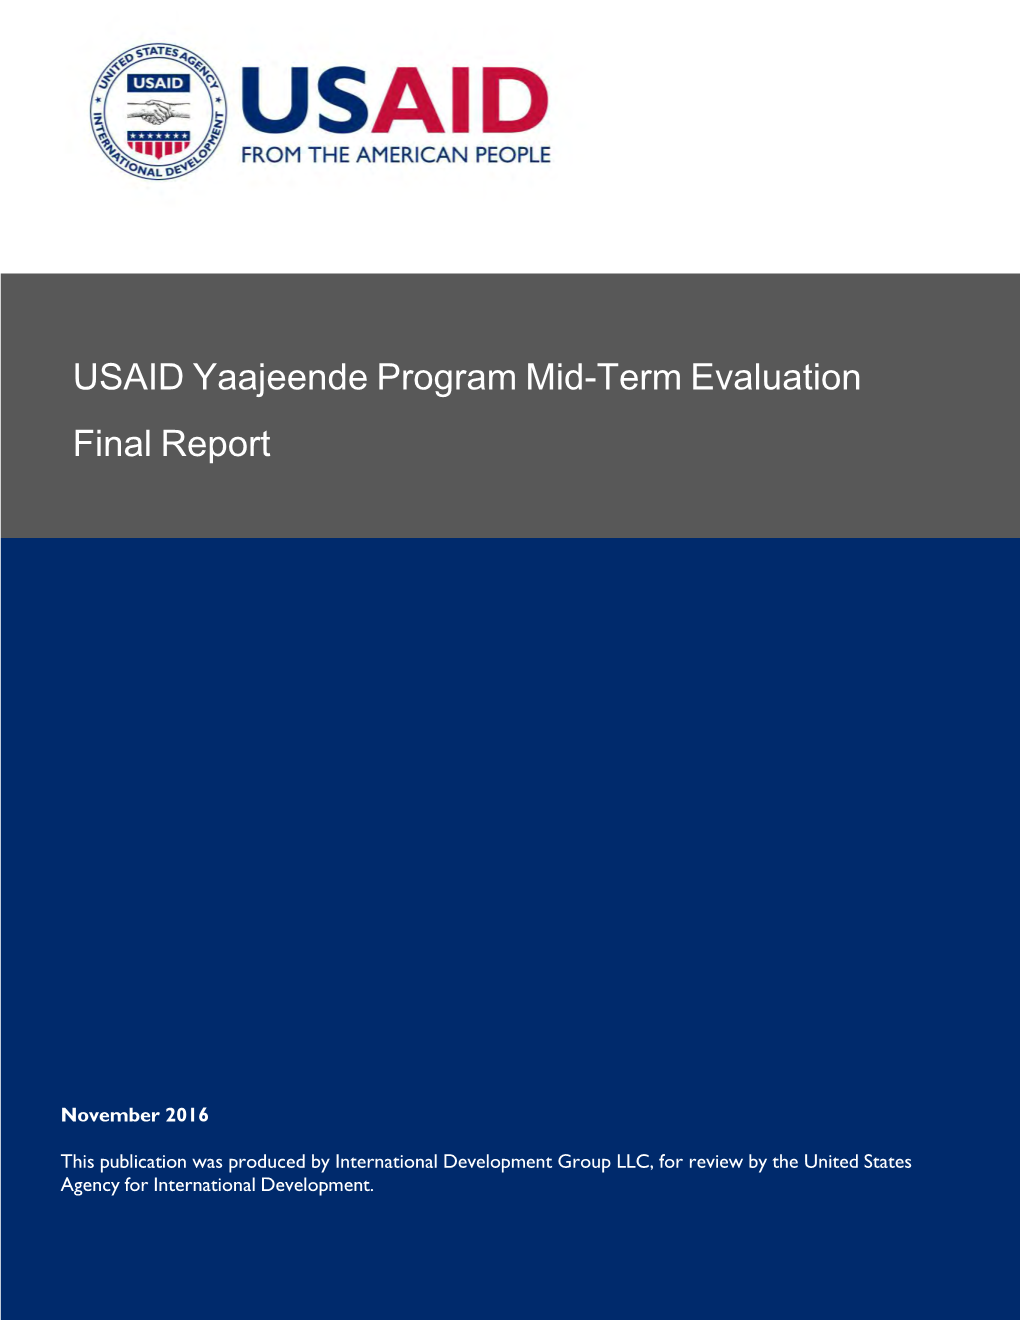 USAID Yaajeende Program Mid-Term Evaluation Final Report